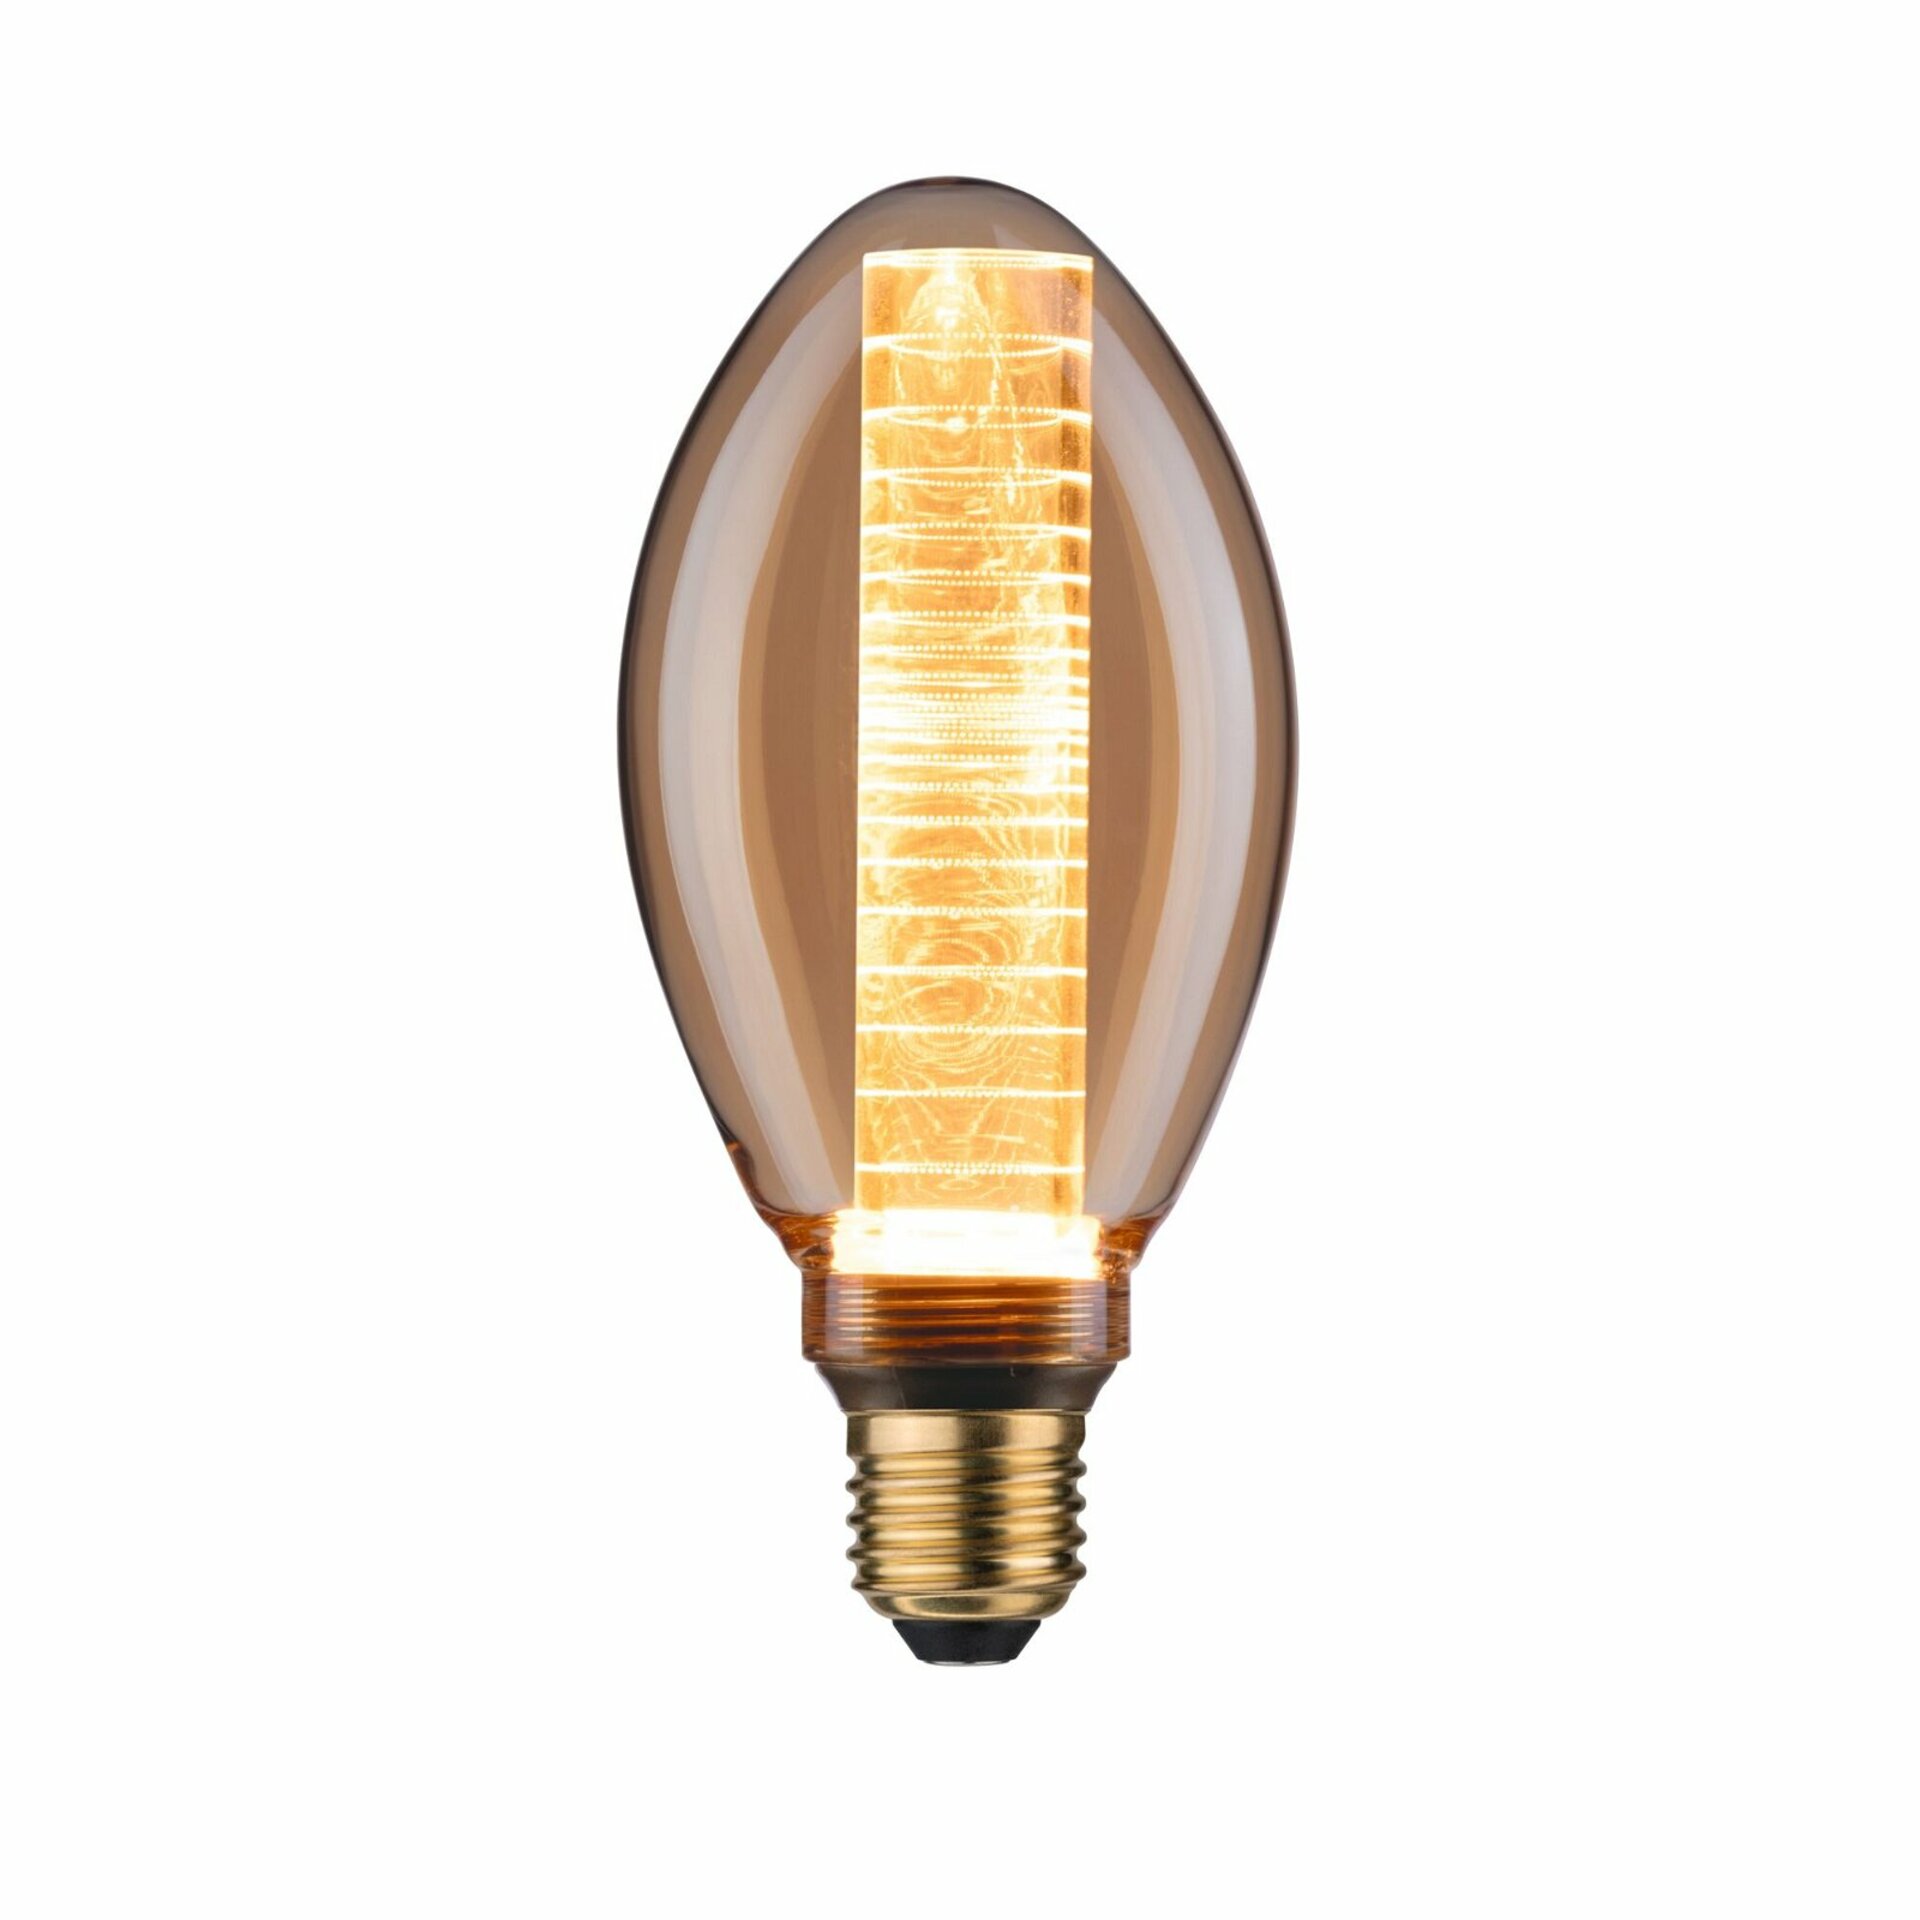 PAULMANN LED Vintage žárovka B75 Inner Glow 4W E27 zlatá s vnitřním kroužkem 286.01 P 28601